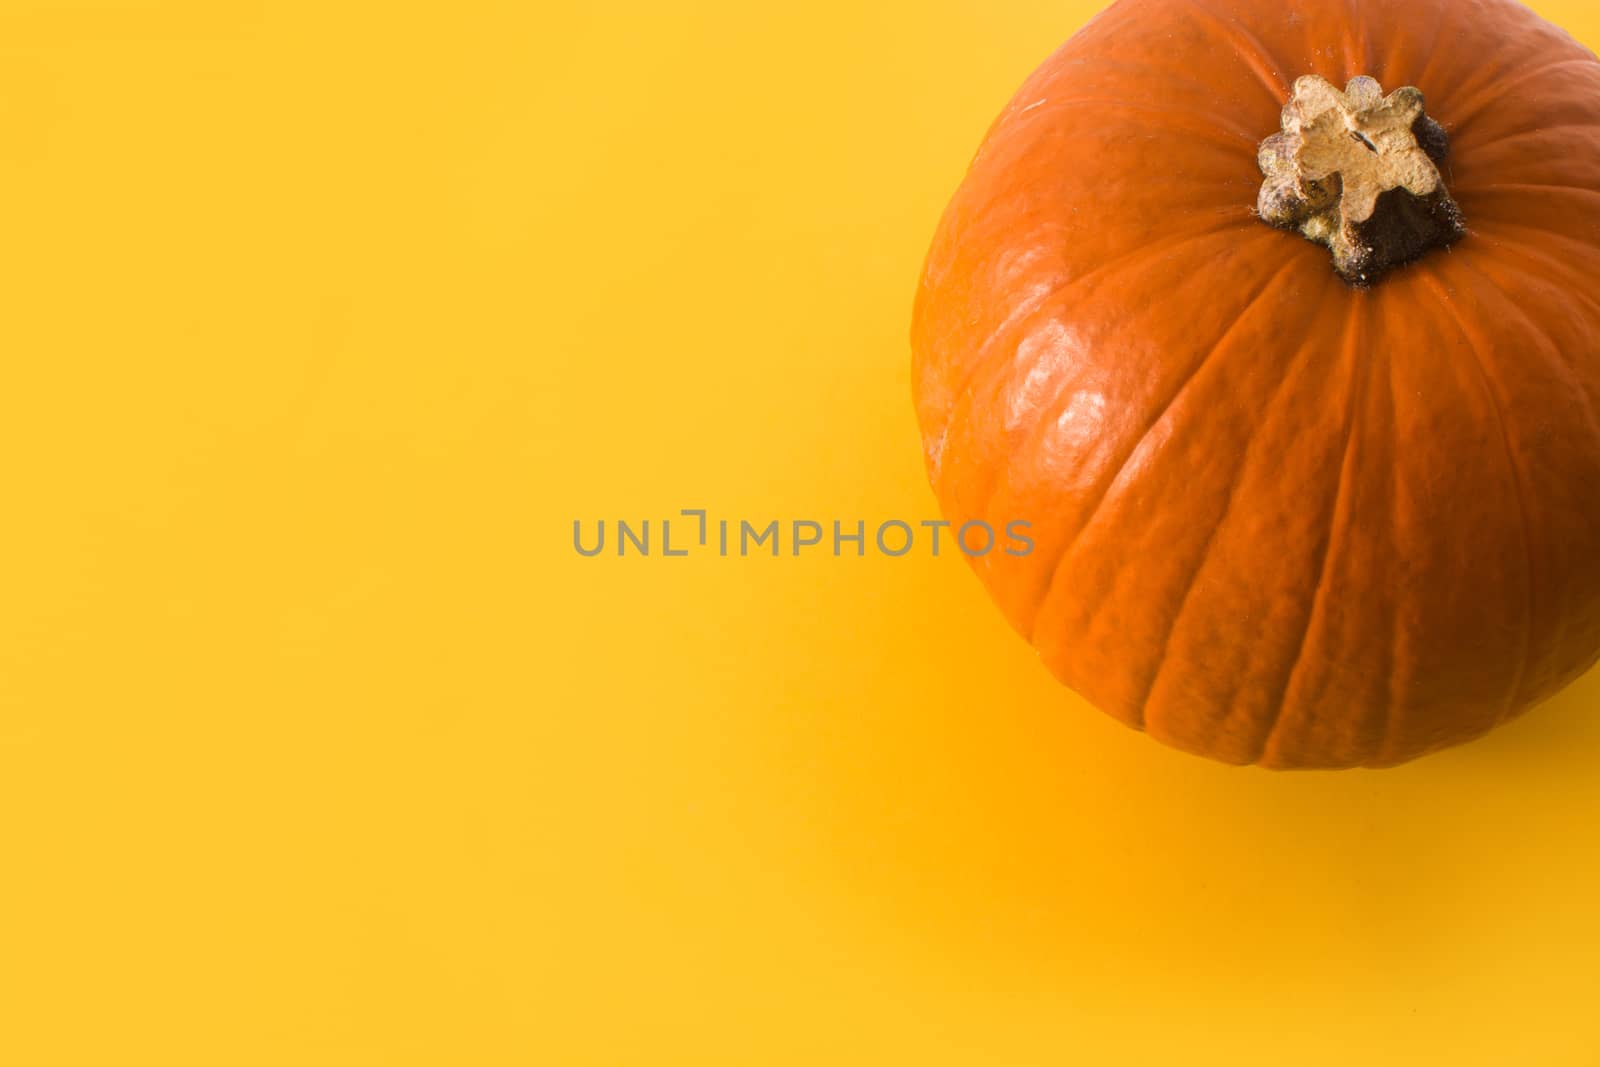 Halloween pumpkin on yellow background by chandlervid85